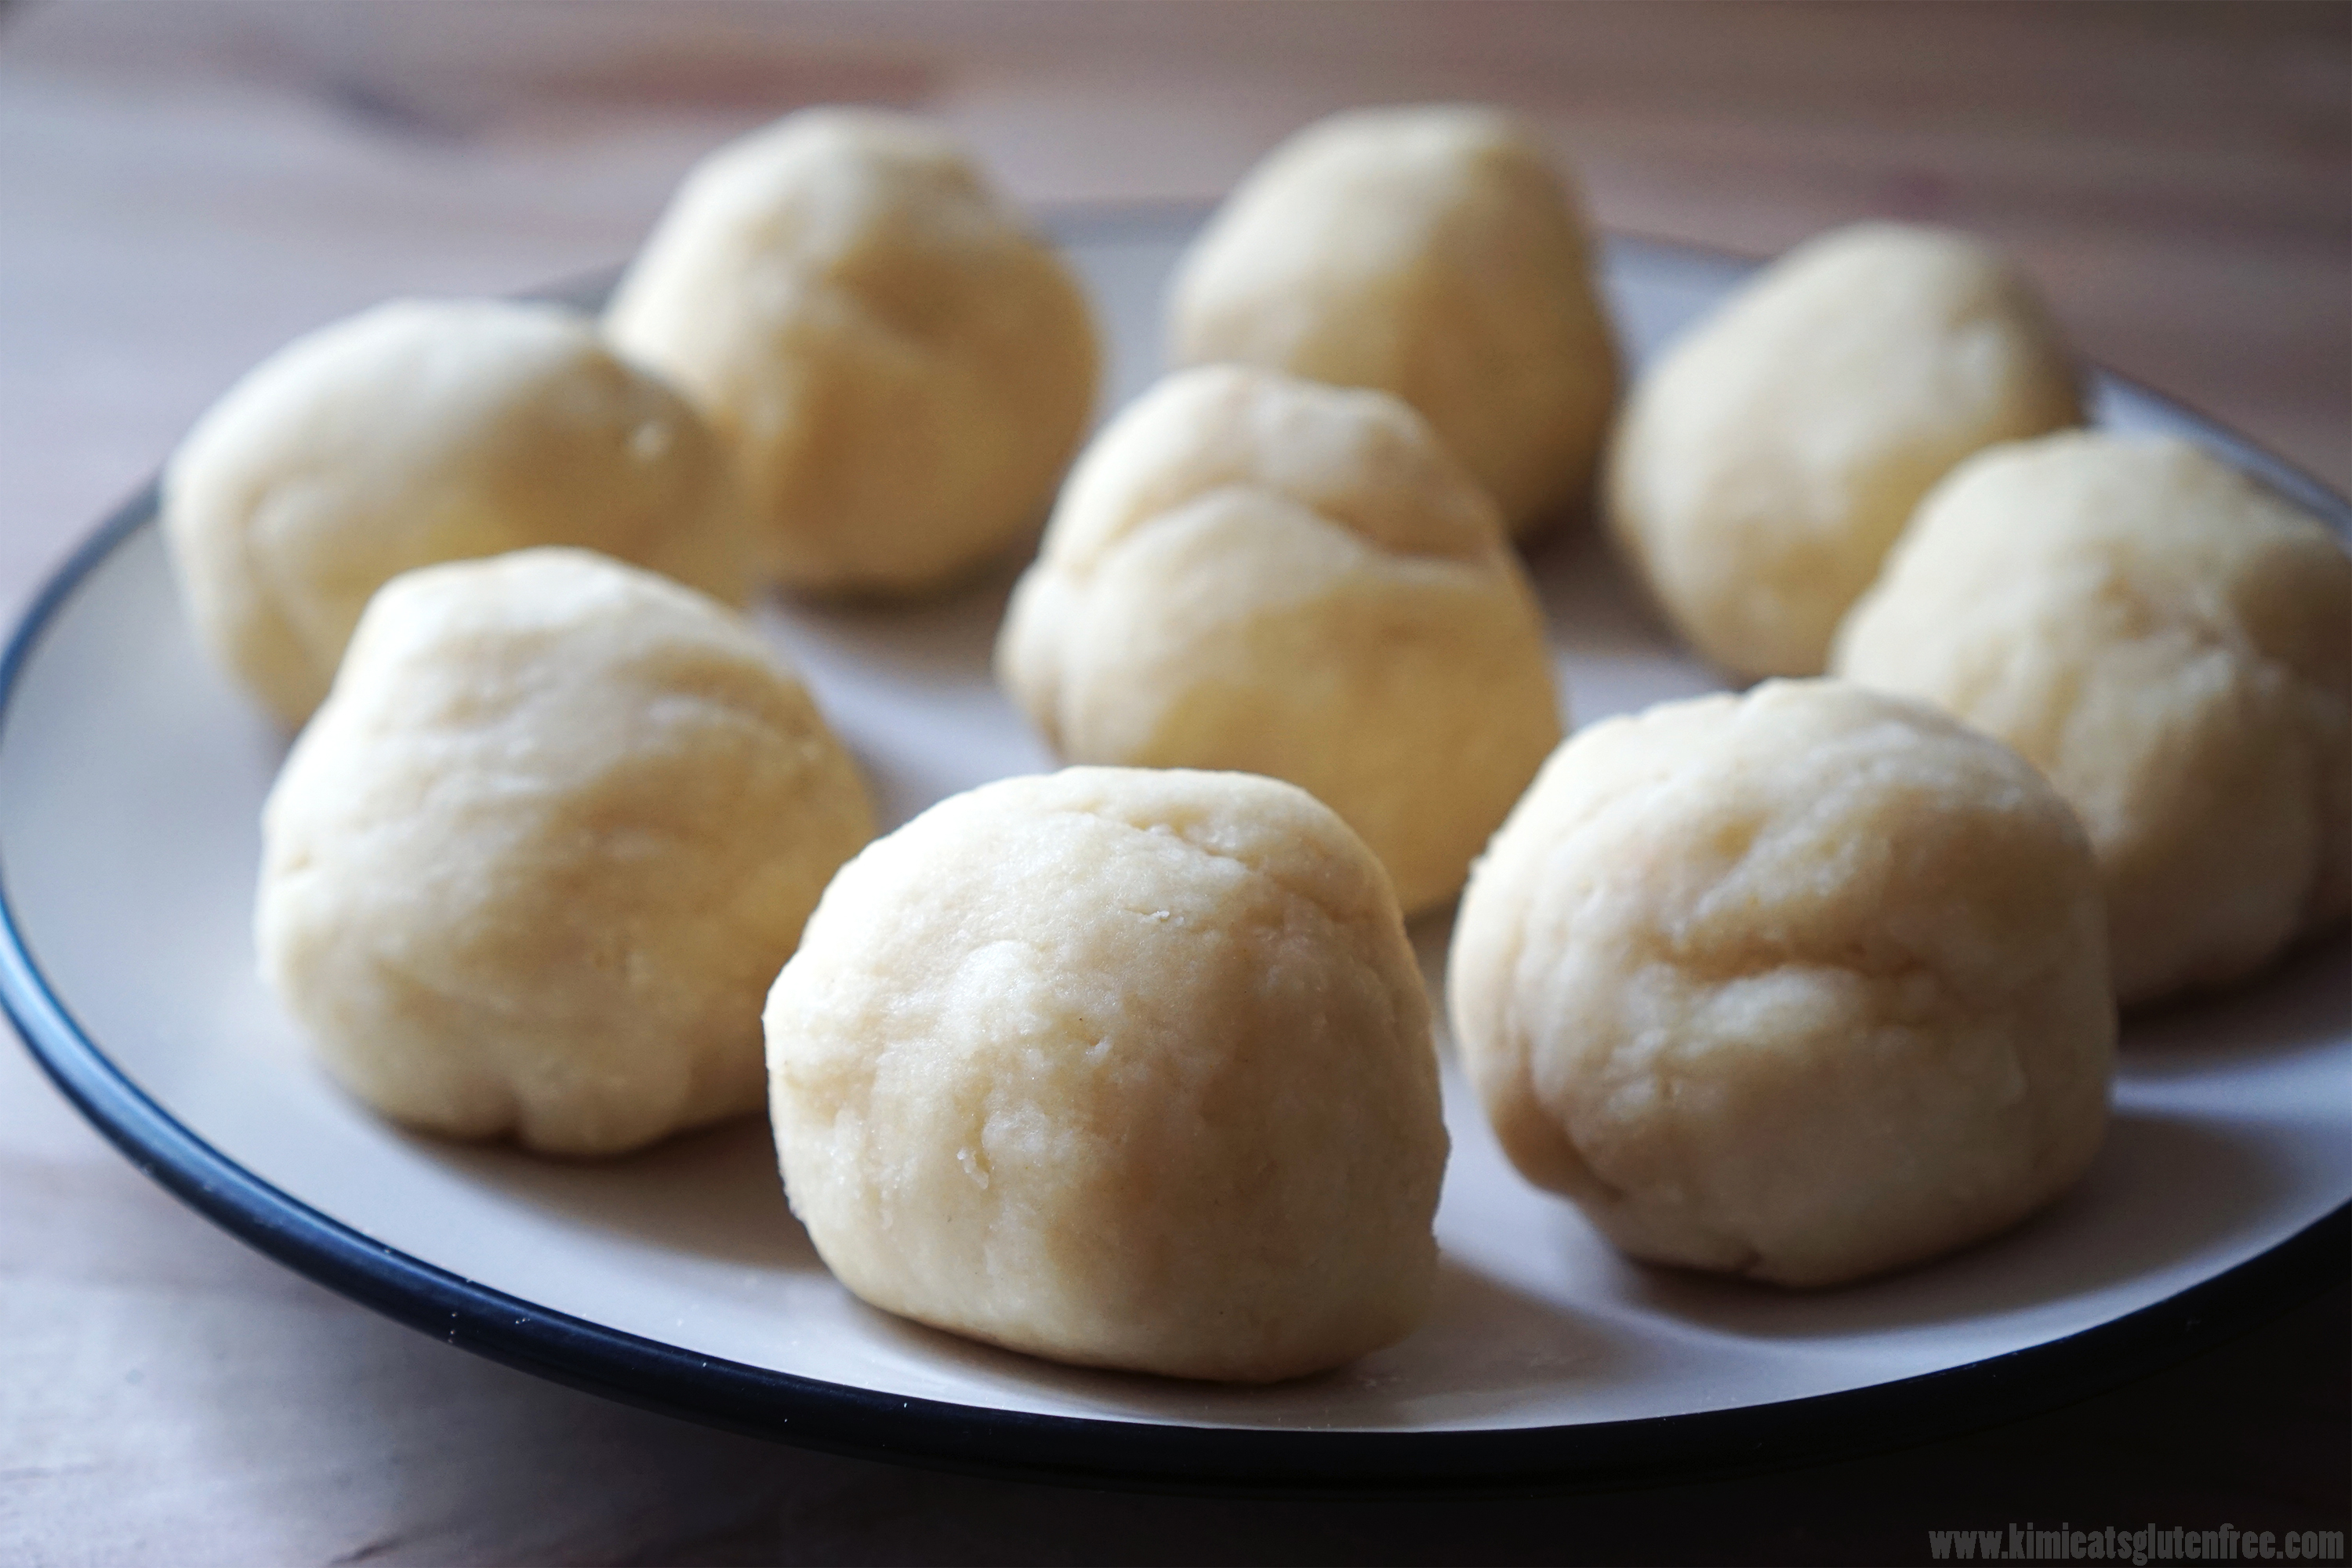 Fufu dumplings - the easiest gluten free dumplings